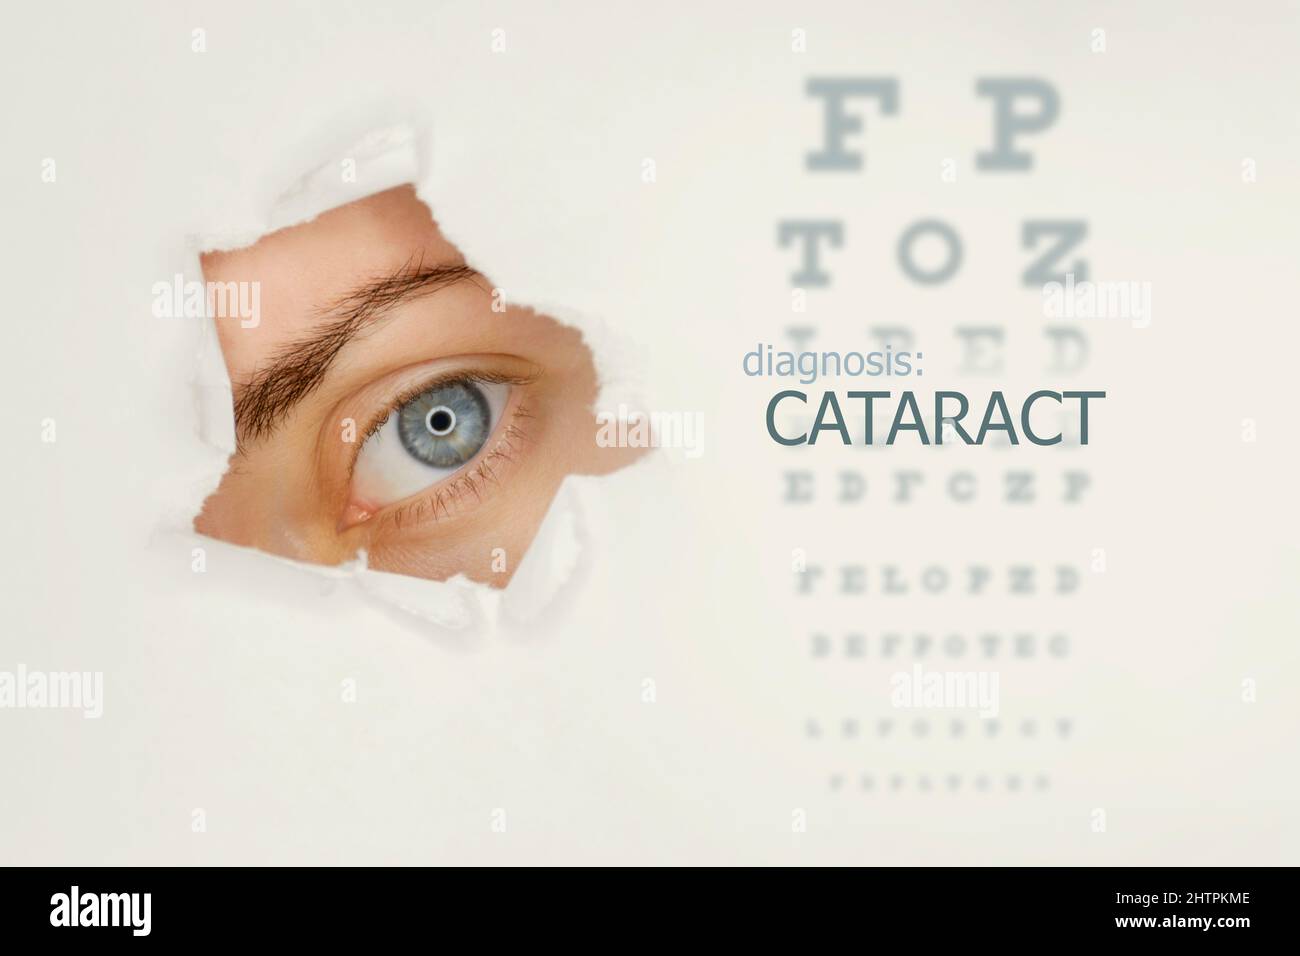 Cataract disease poster wwith eye test chart and blue eye on left. Studio grey background Stock Photo